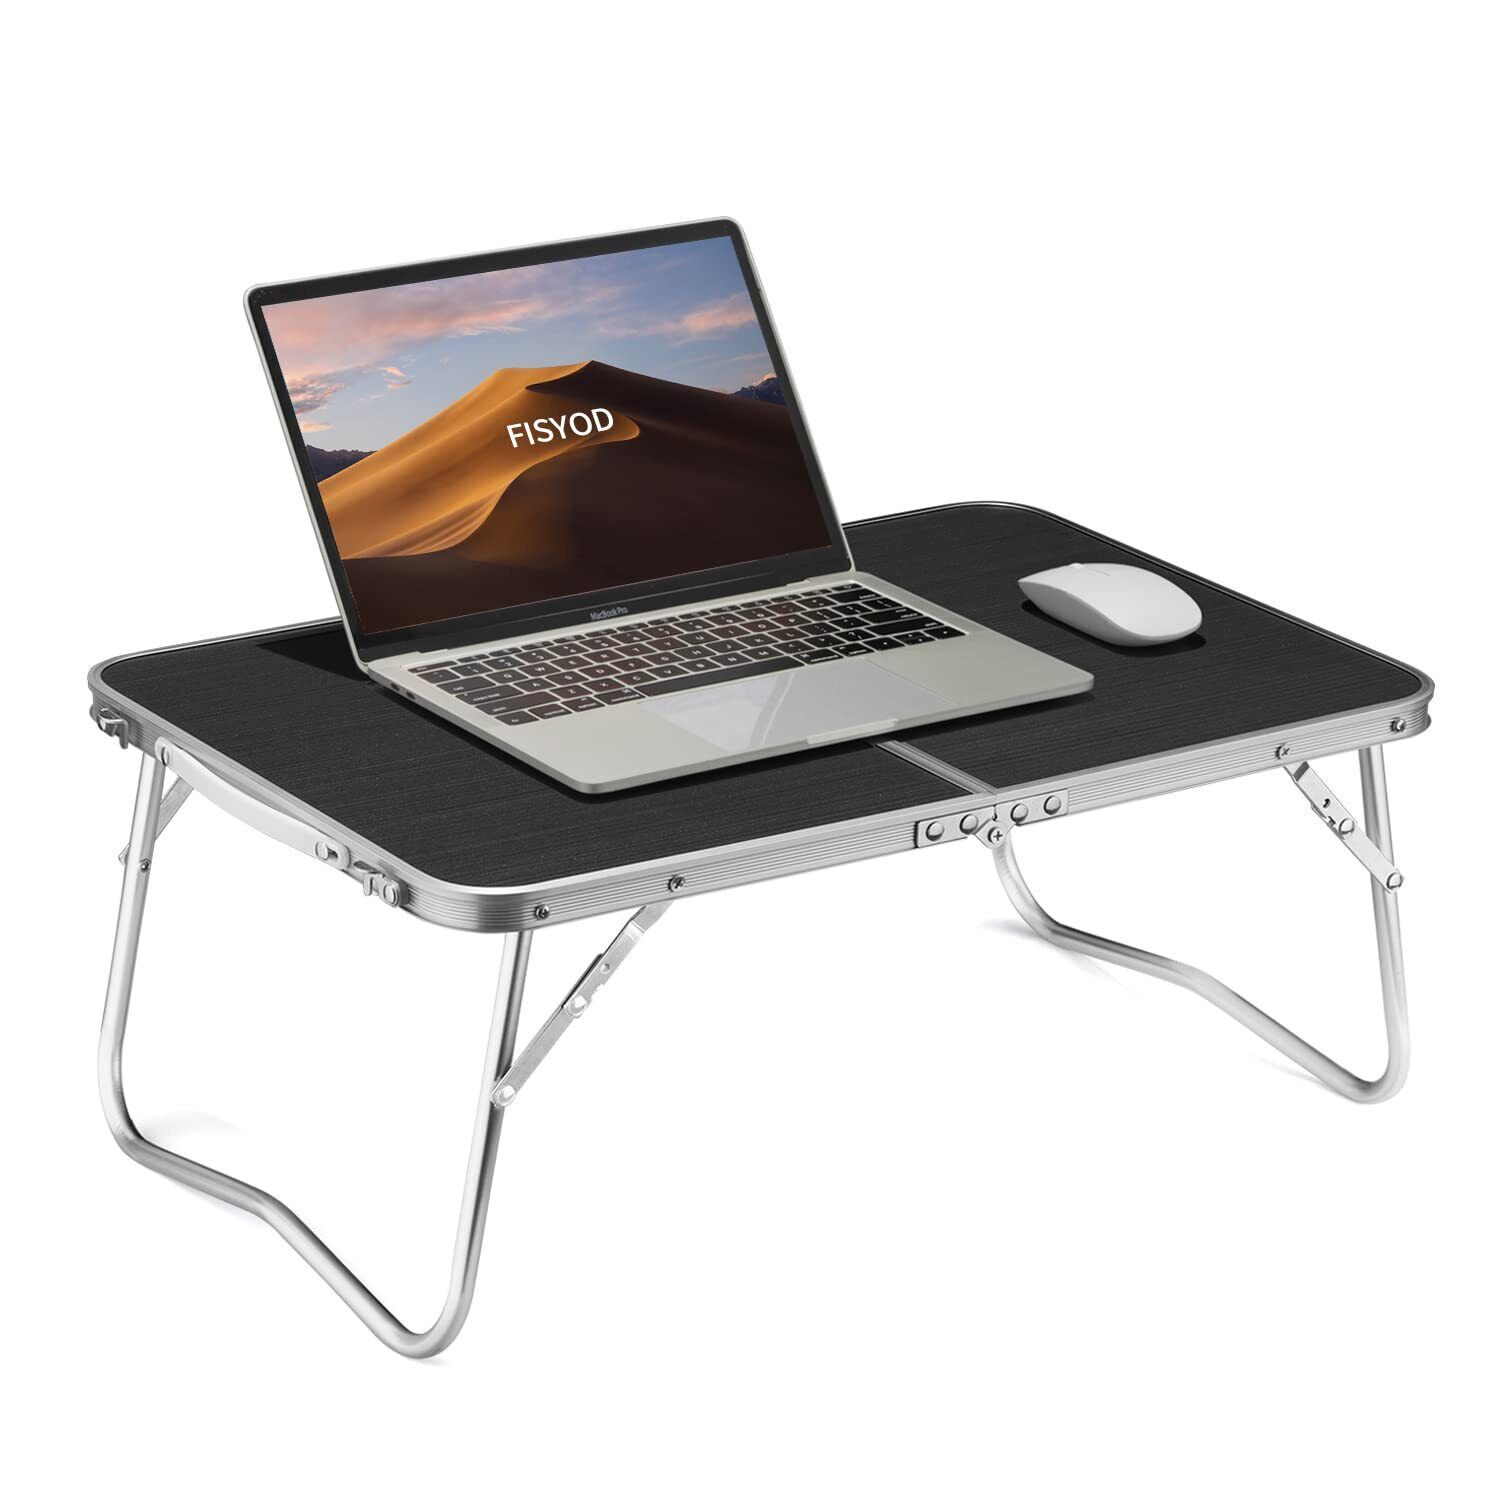 Folding Laptop Table, Bed Table Lap Desk, Breakfast Tray Table, Portable Mini...